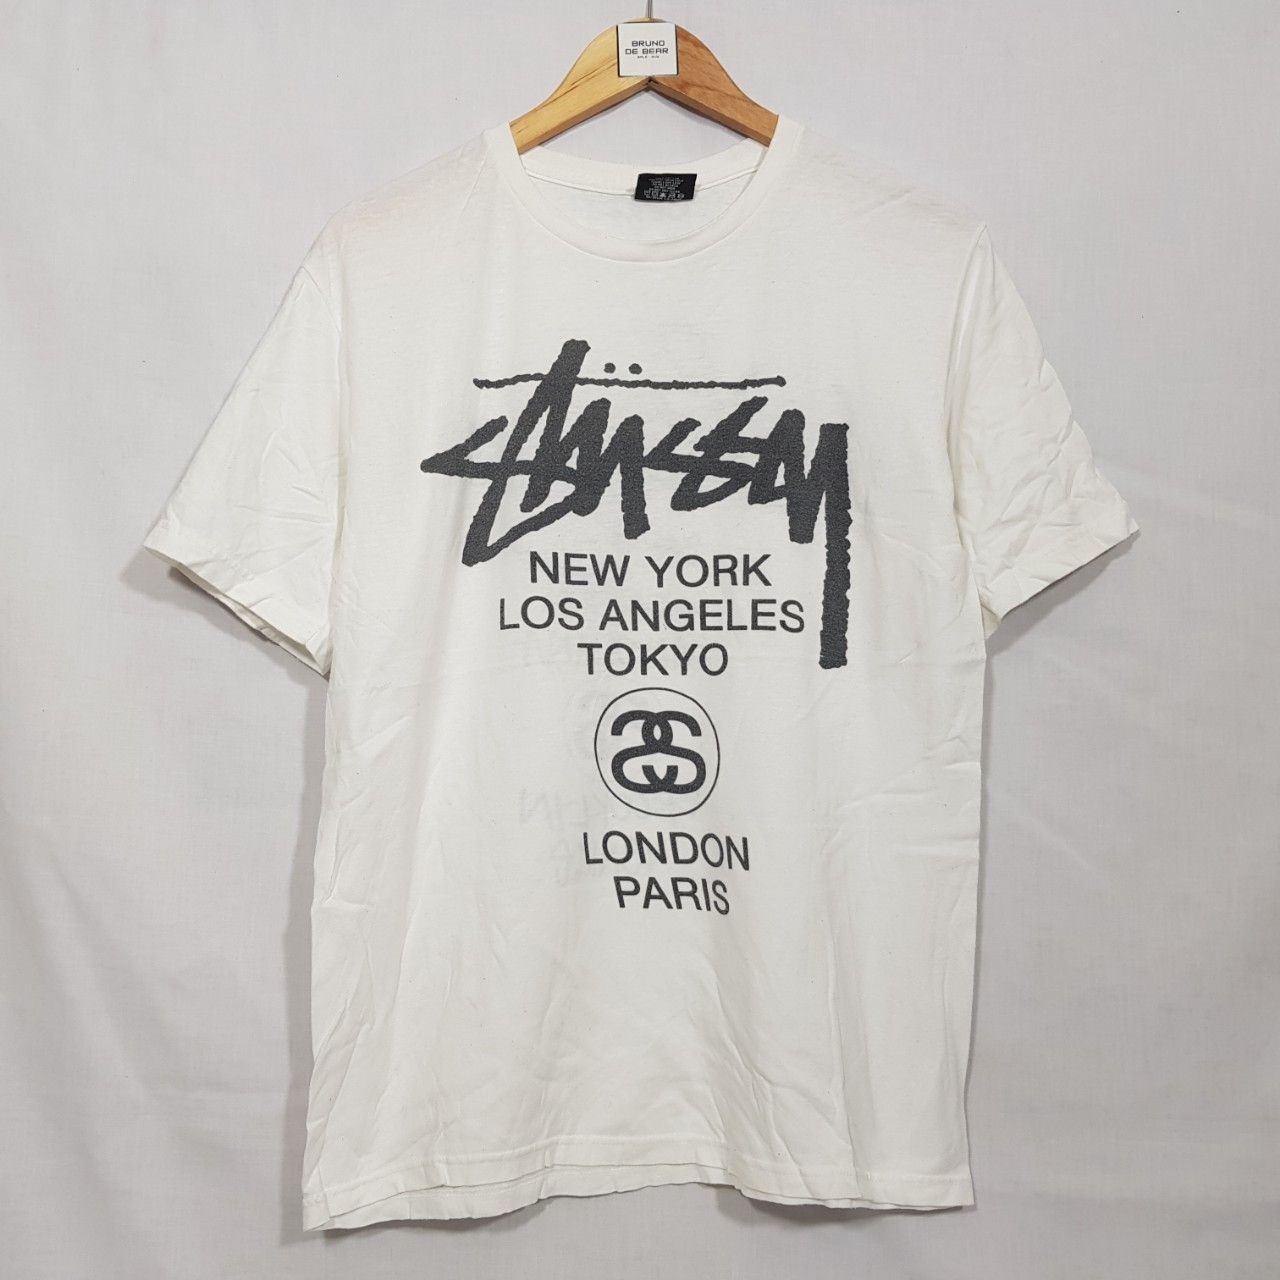 Stussy STUSSY Shirt New York Los Angeles Tokyo London Paris Size US S / EU 44-46 / 1 - 3 Thumbnail